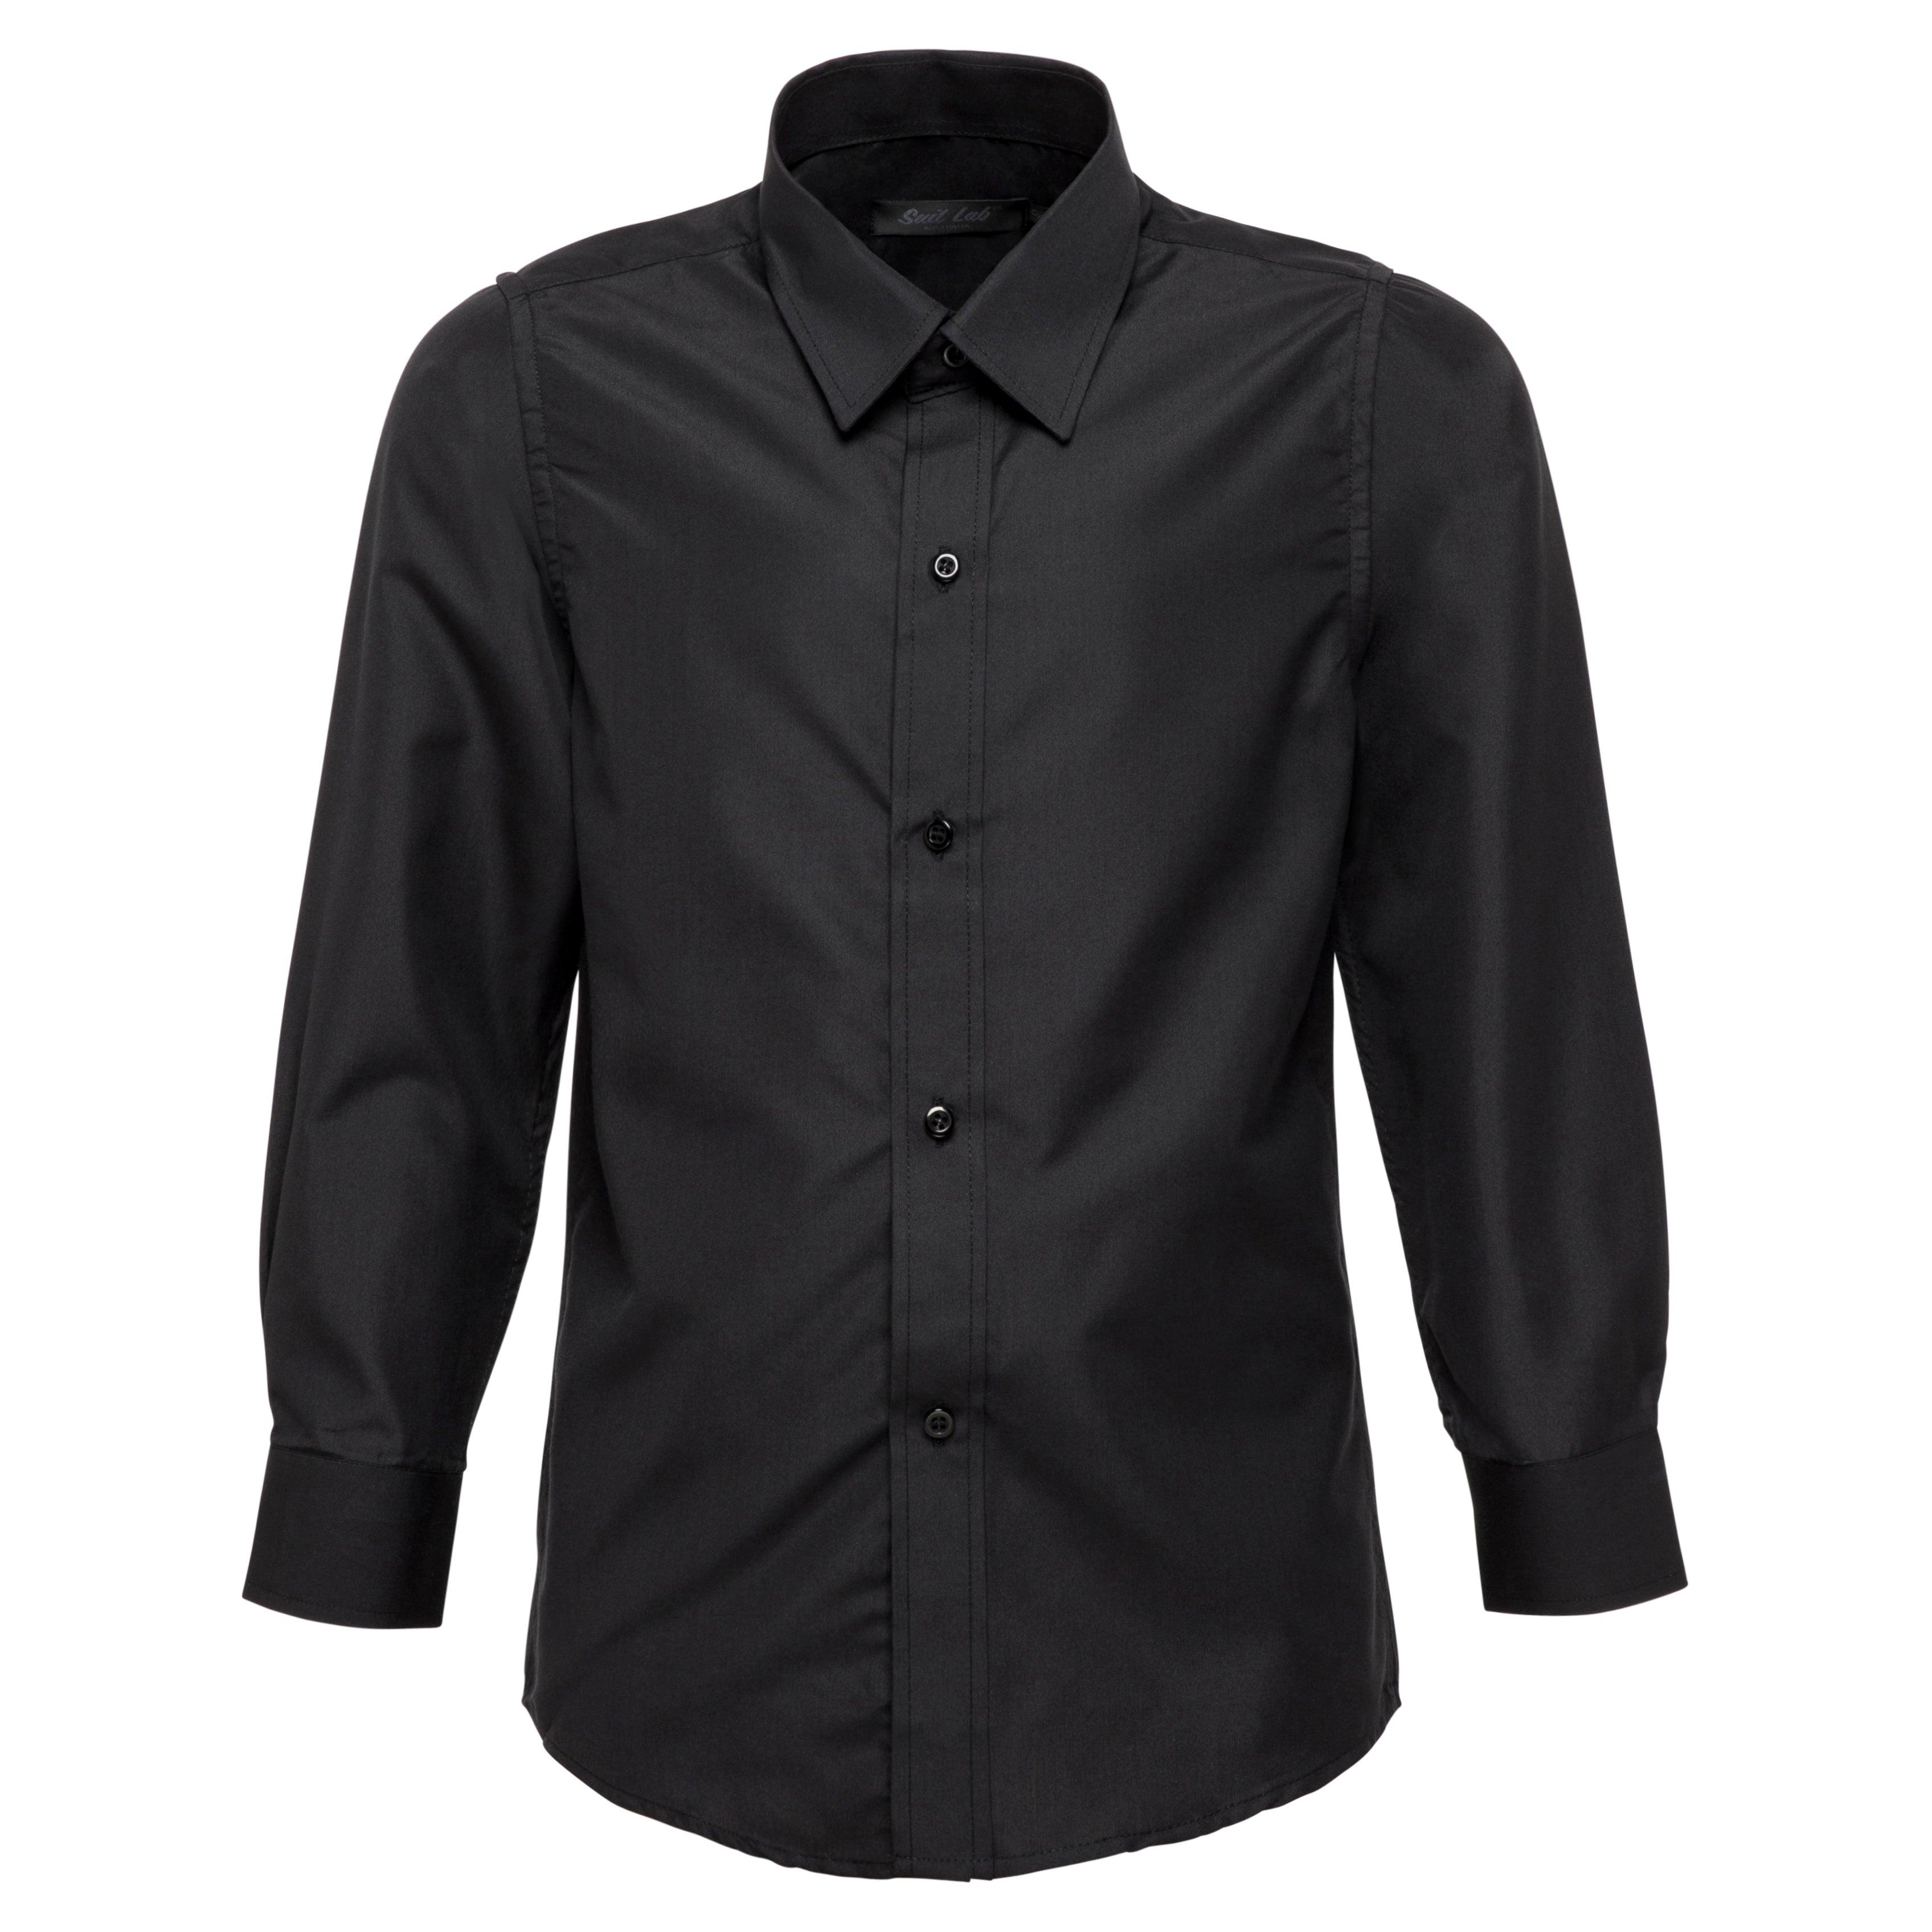 black dress shirt with black buttons